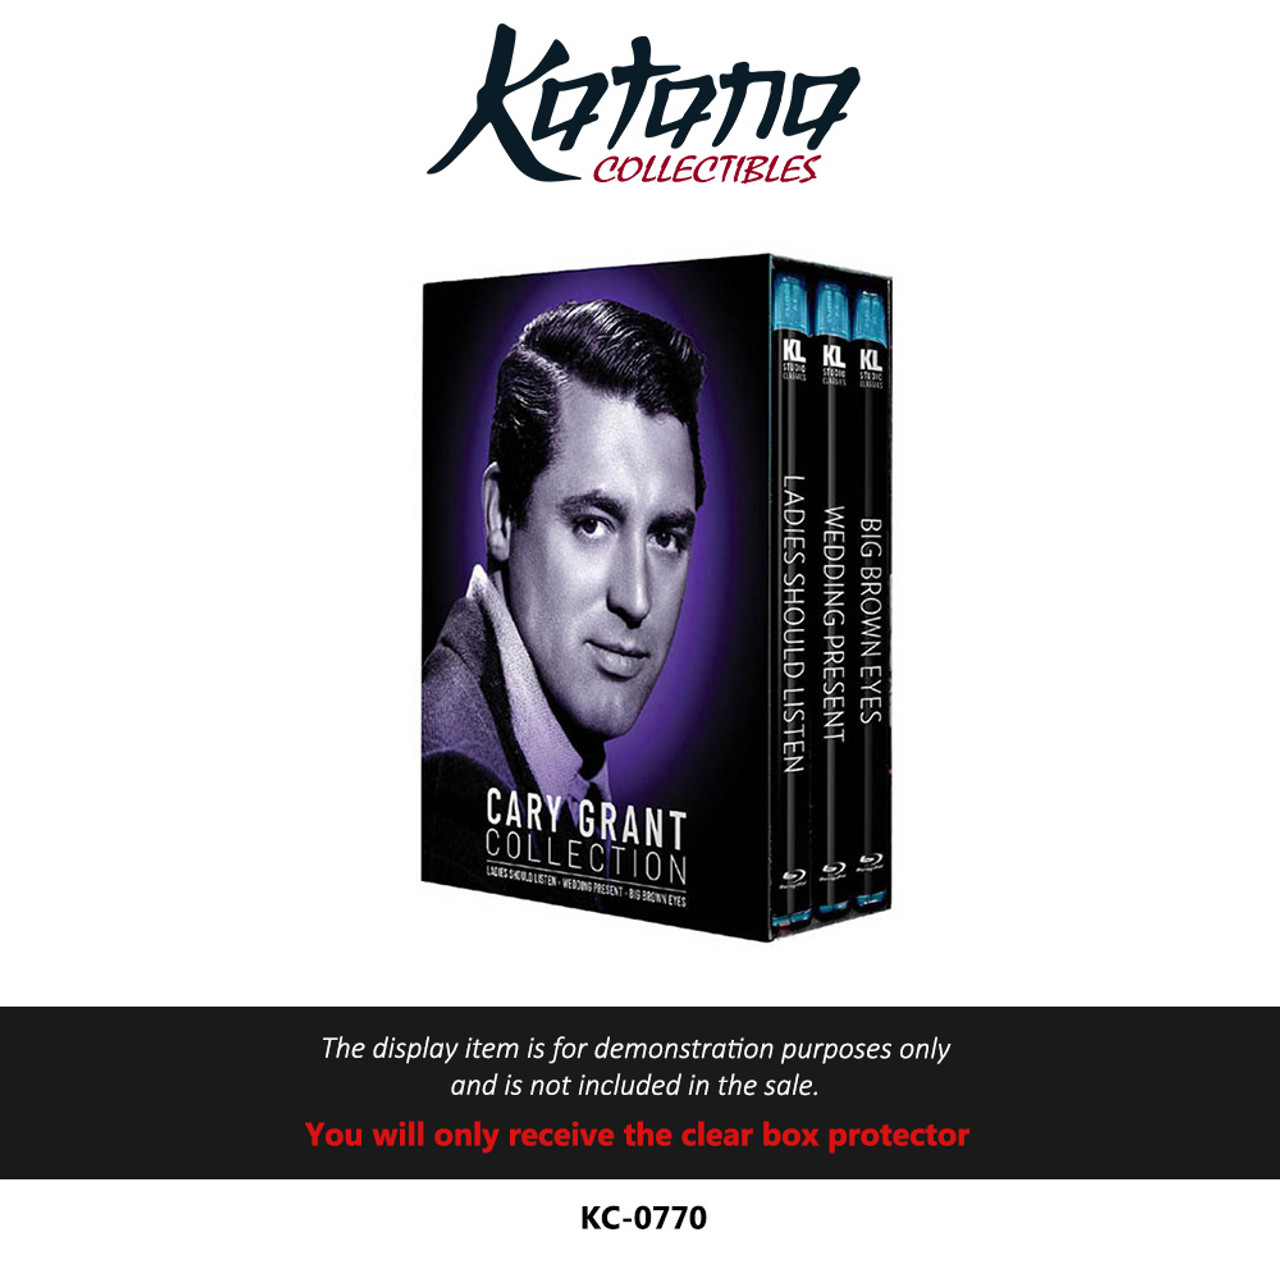 Katana Collectibles Protector For Cary Grant Collection Boxset